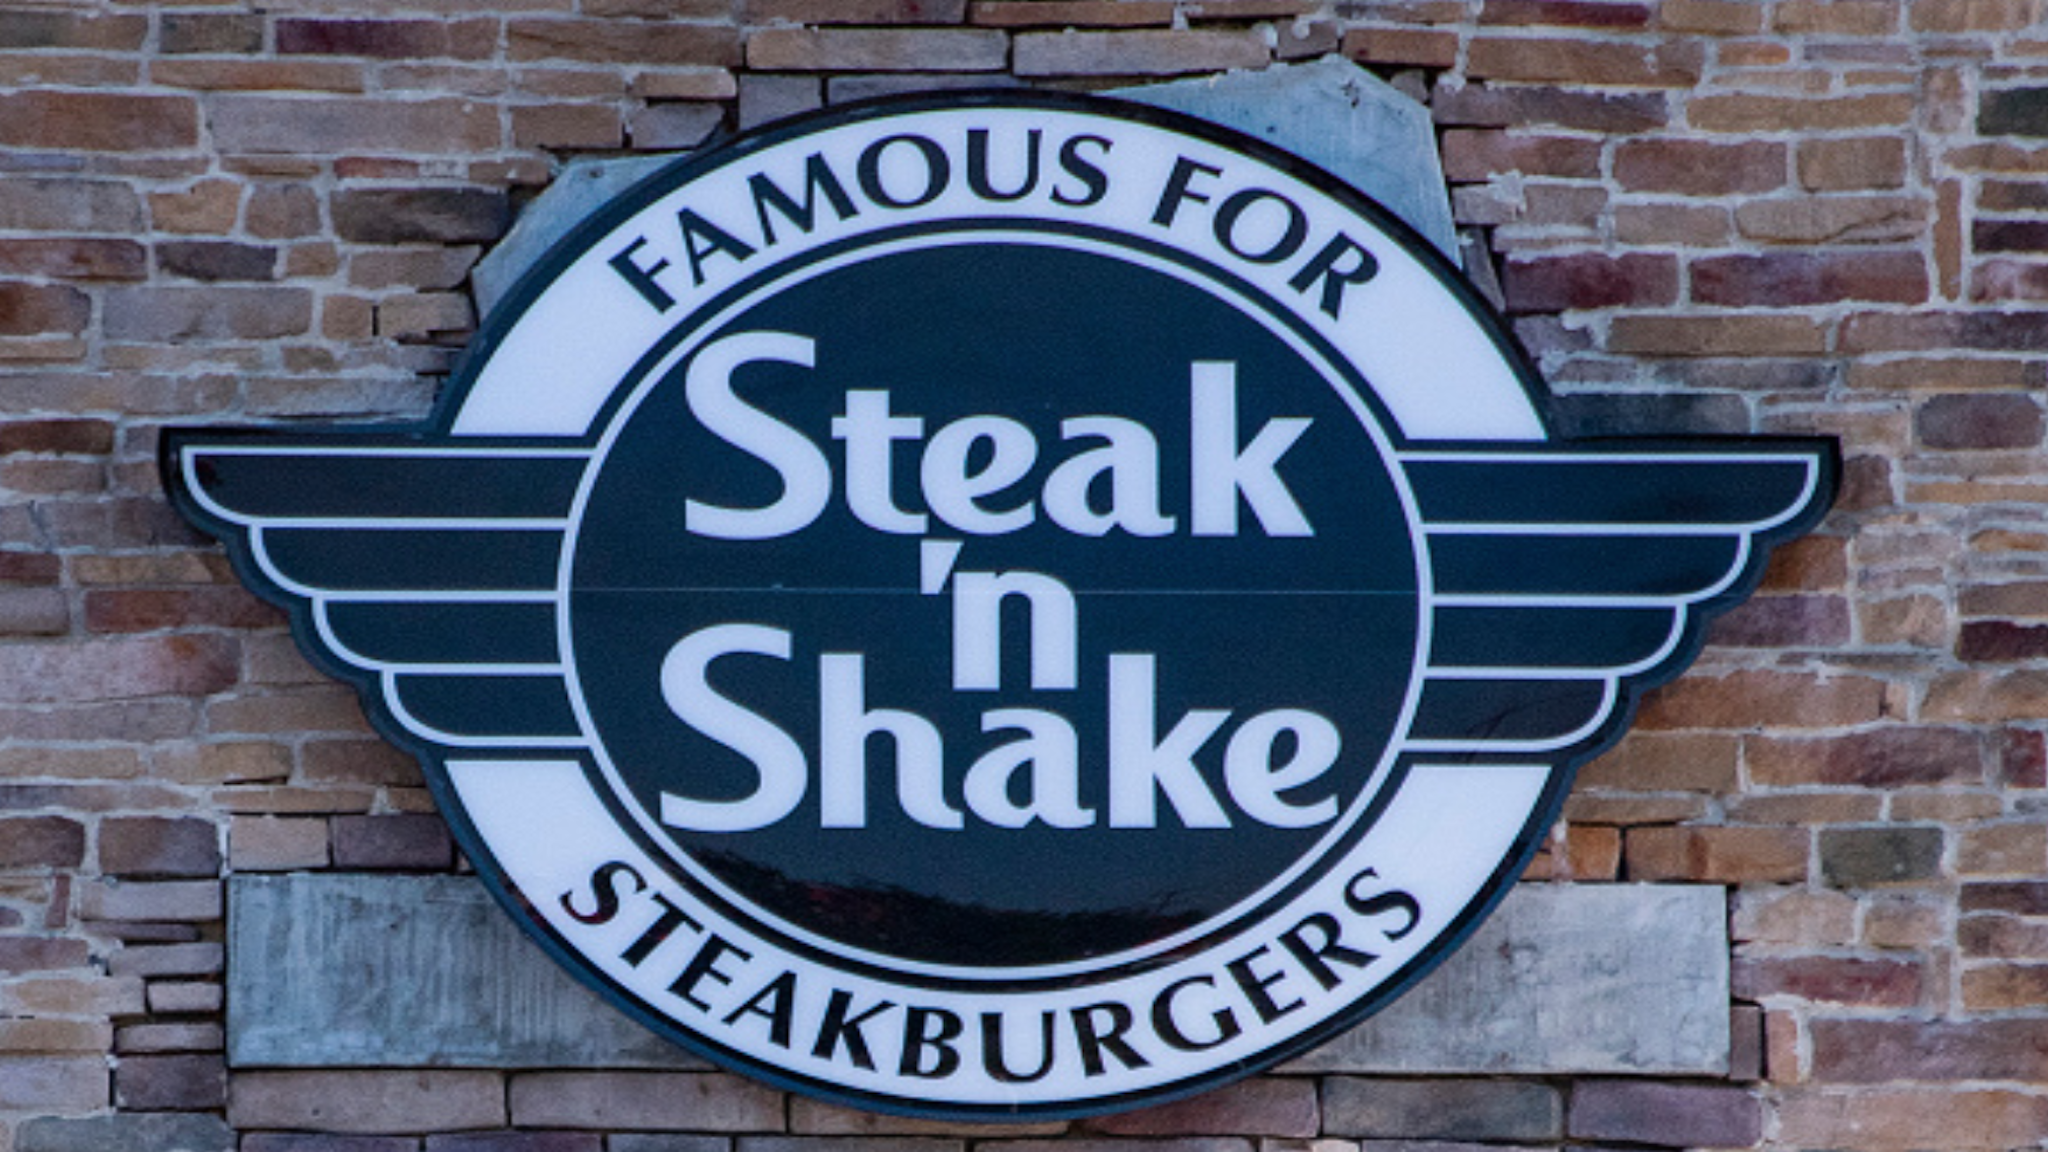 Steak 'n Shake chain restaurant in Middletown, DE, on July 26, 2019.